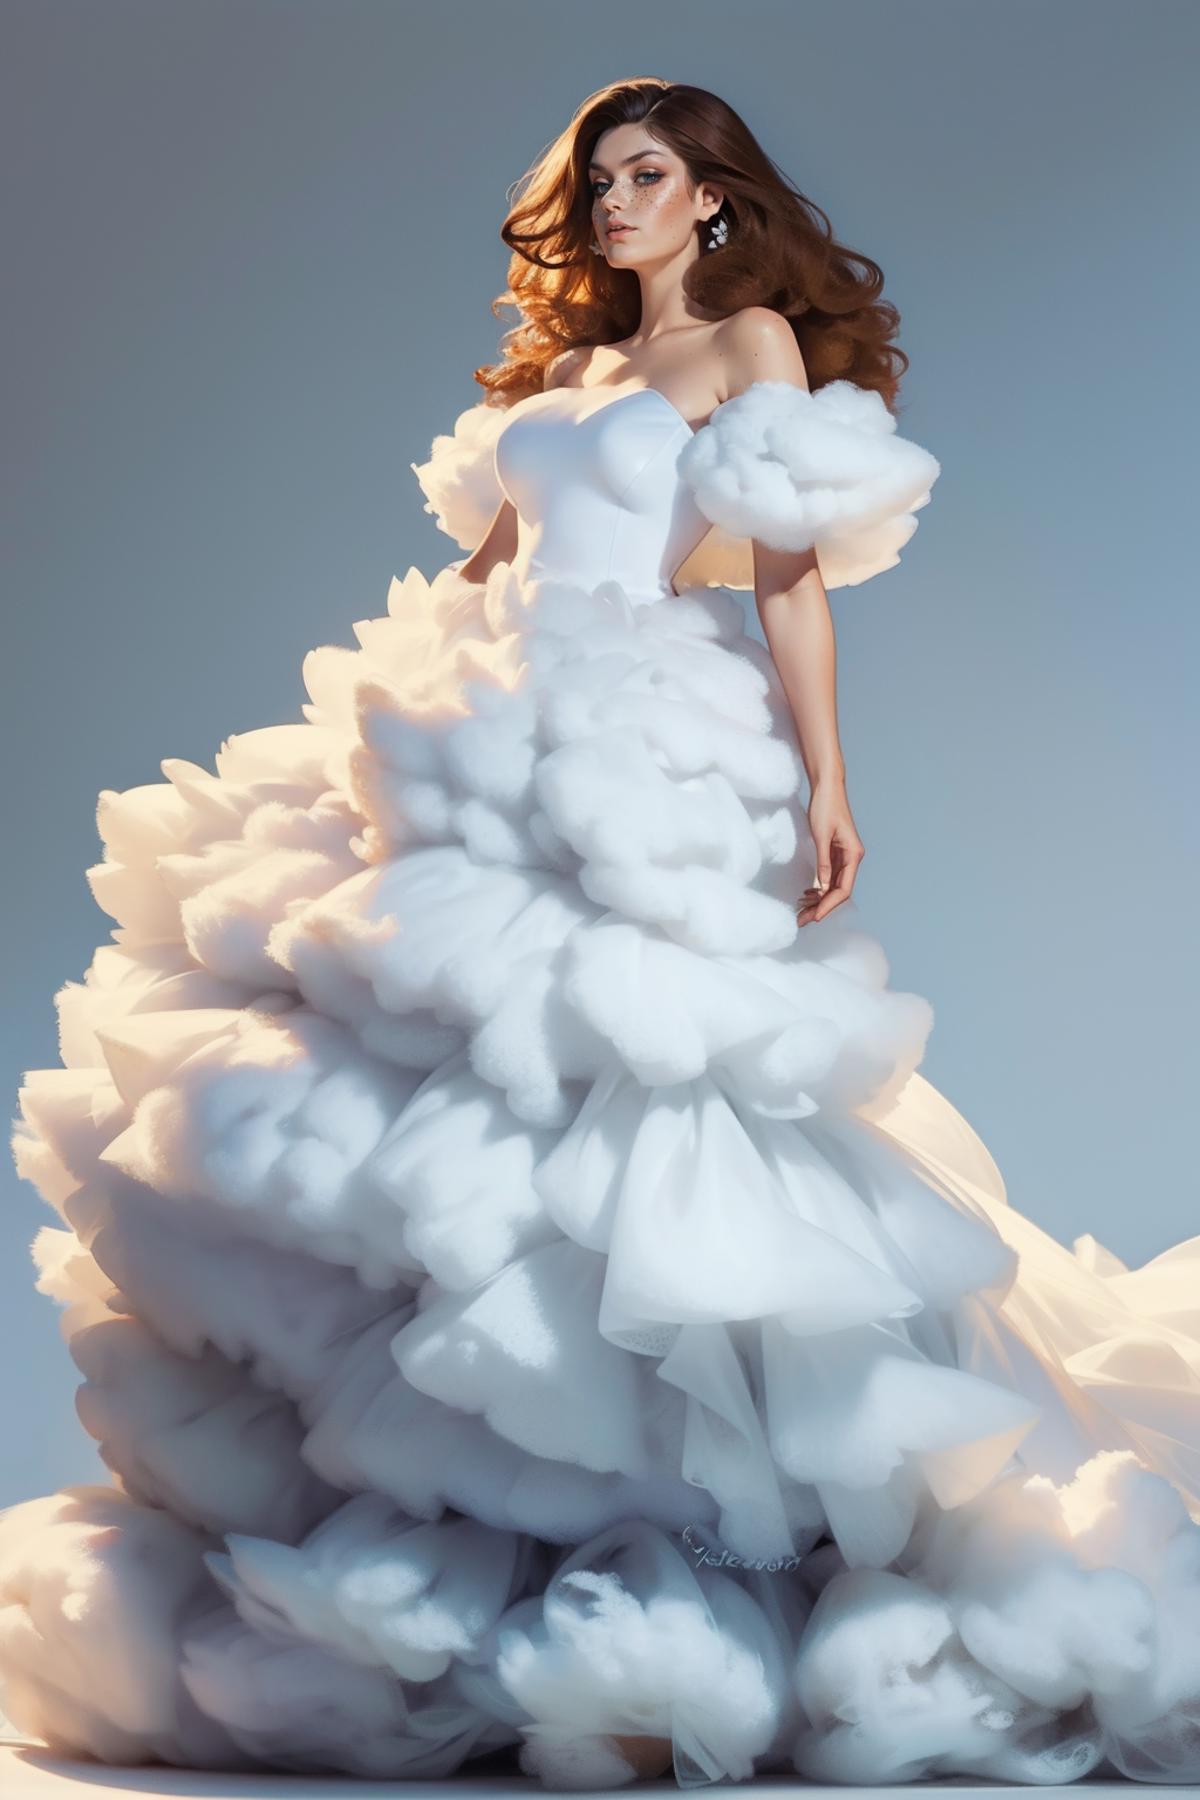 Cloud Dress image by freckledvixon